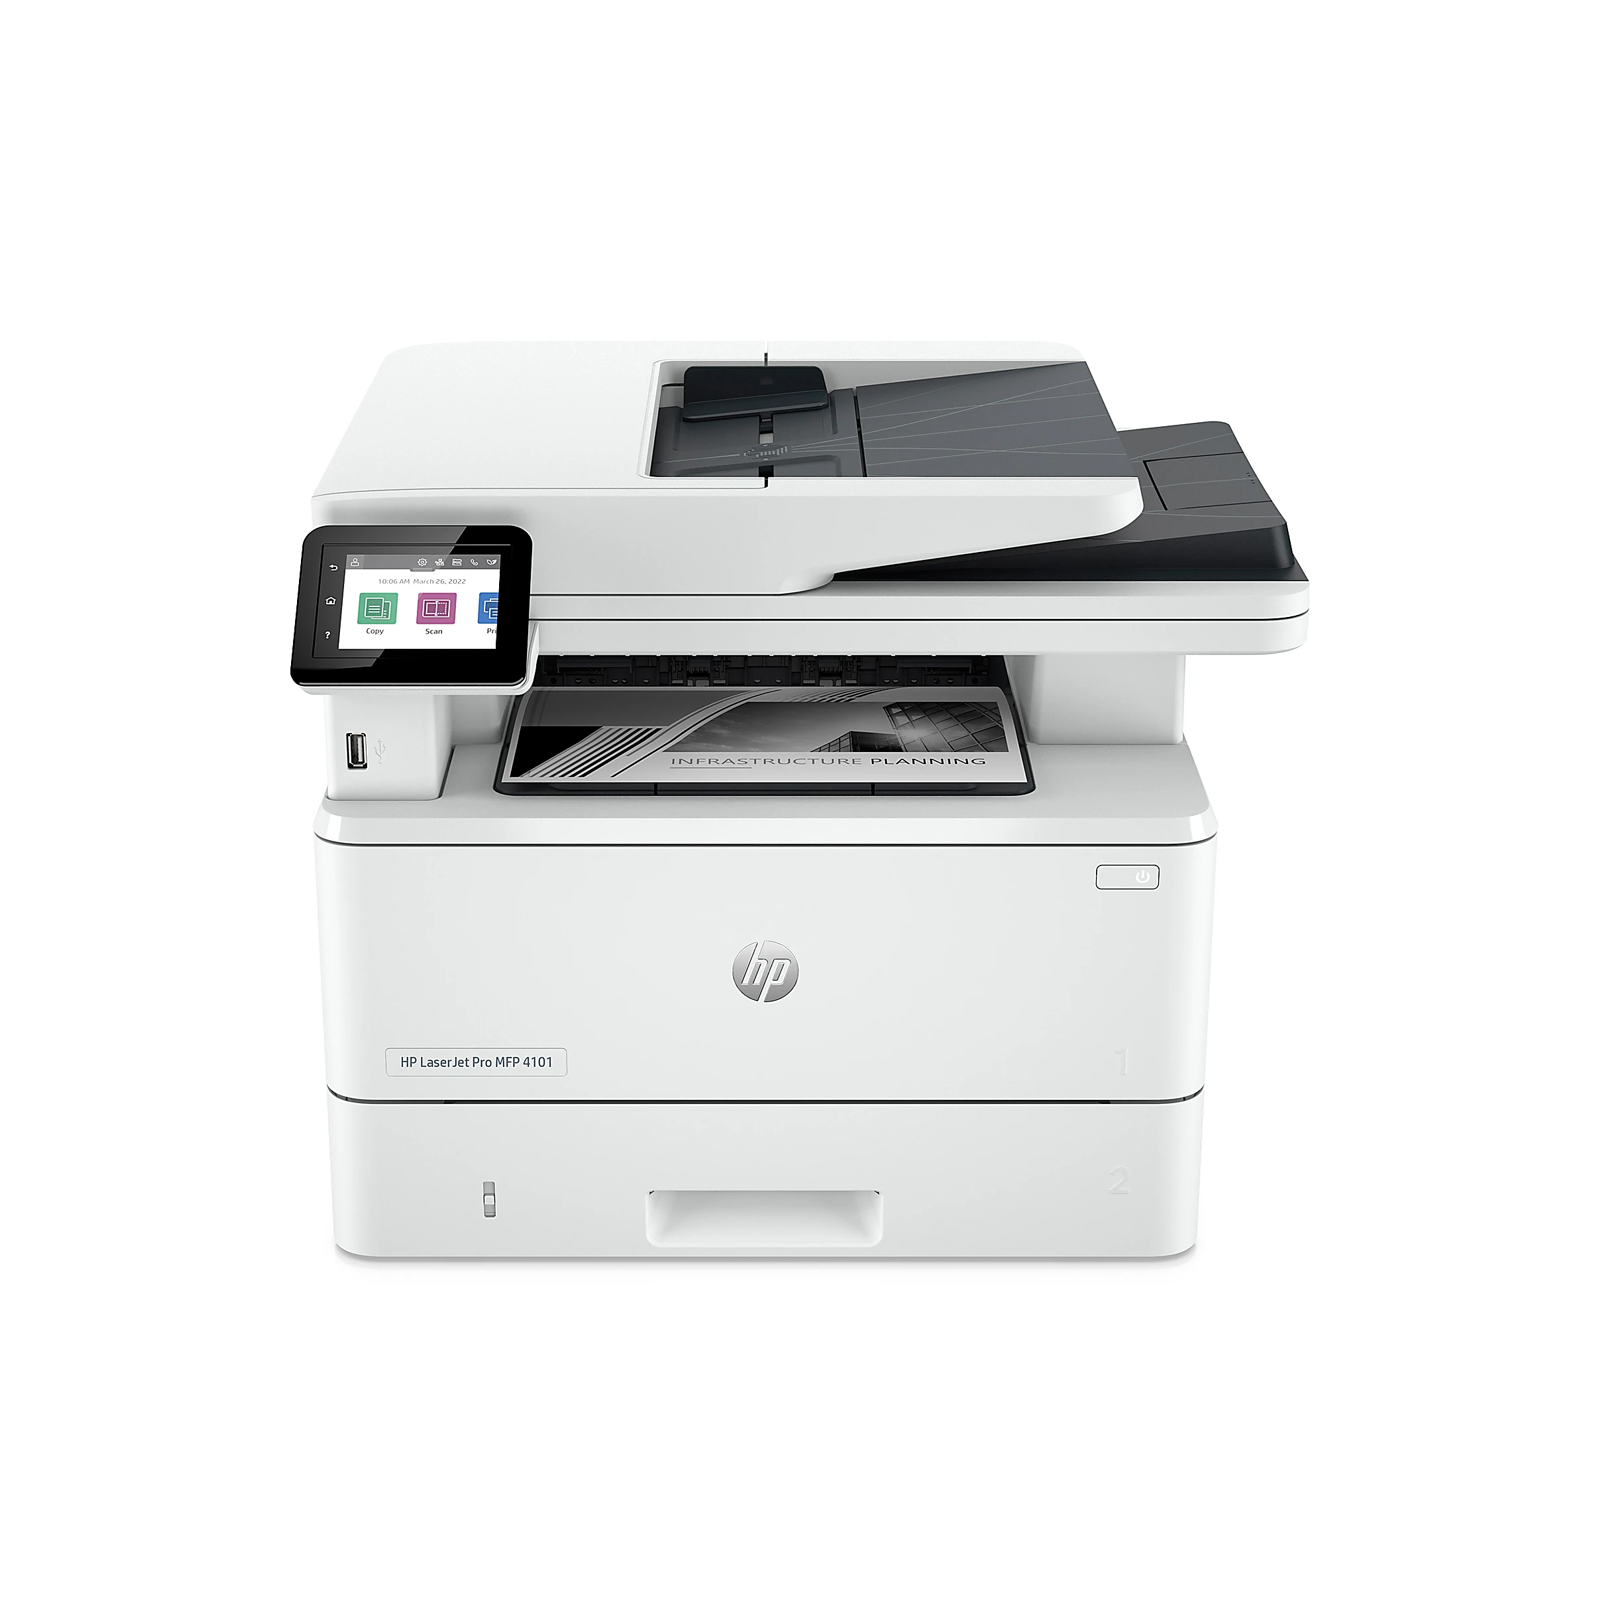 123printer Desk Certified Refurbished HP LaserJet Pro MFP 4101fdn Laser All-in-One Monochrome Printer